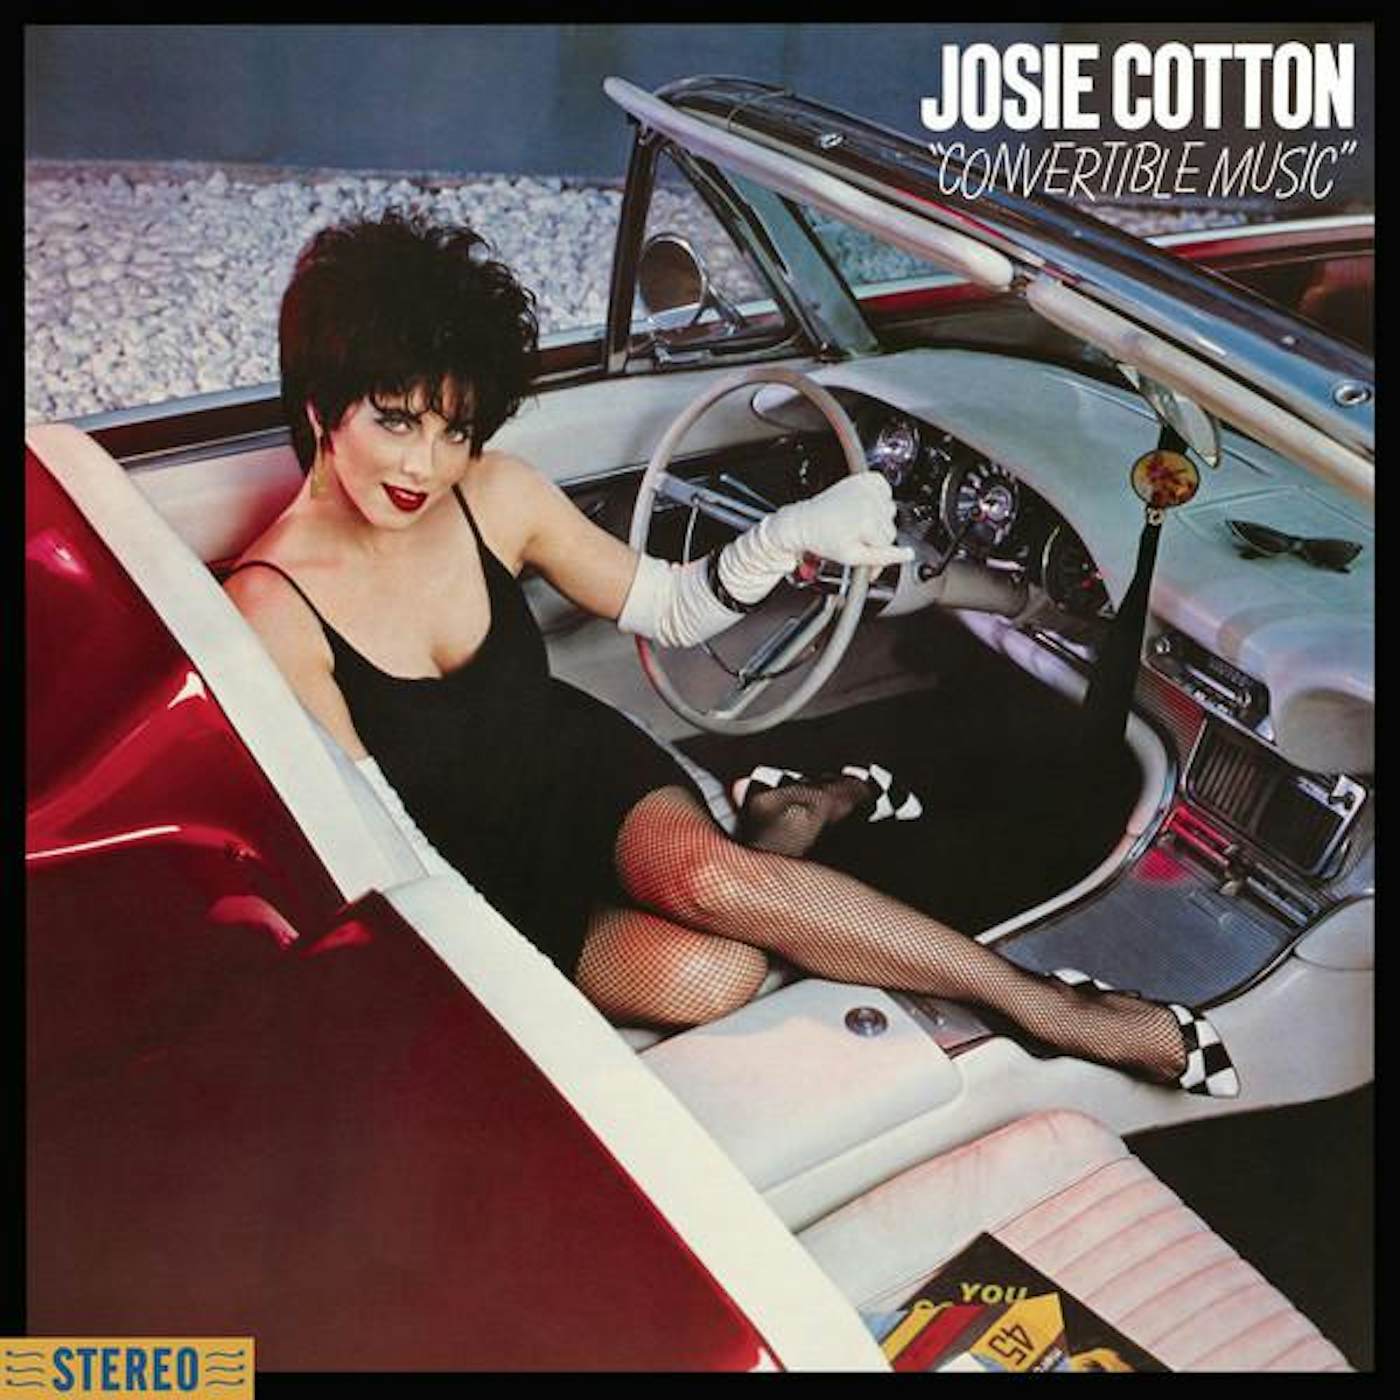 Josie Cotton Convertible Music Vinyl Record